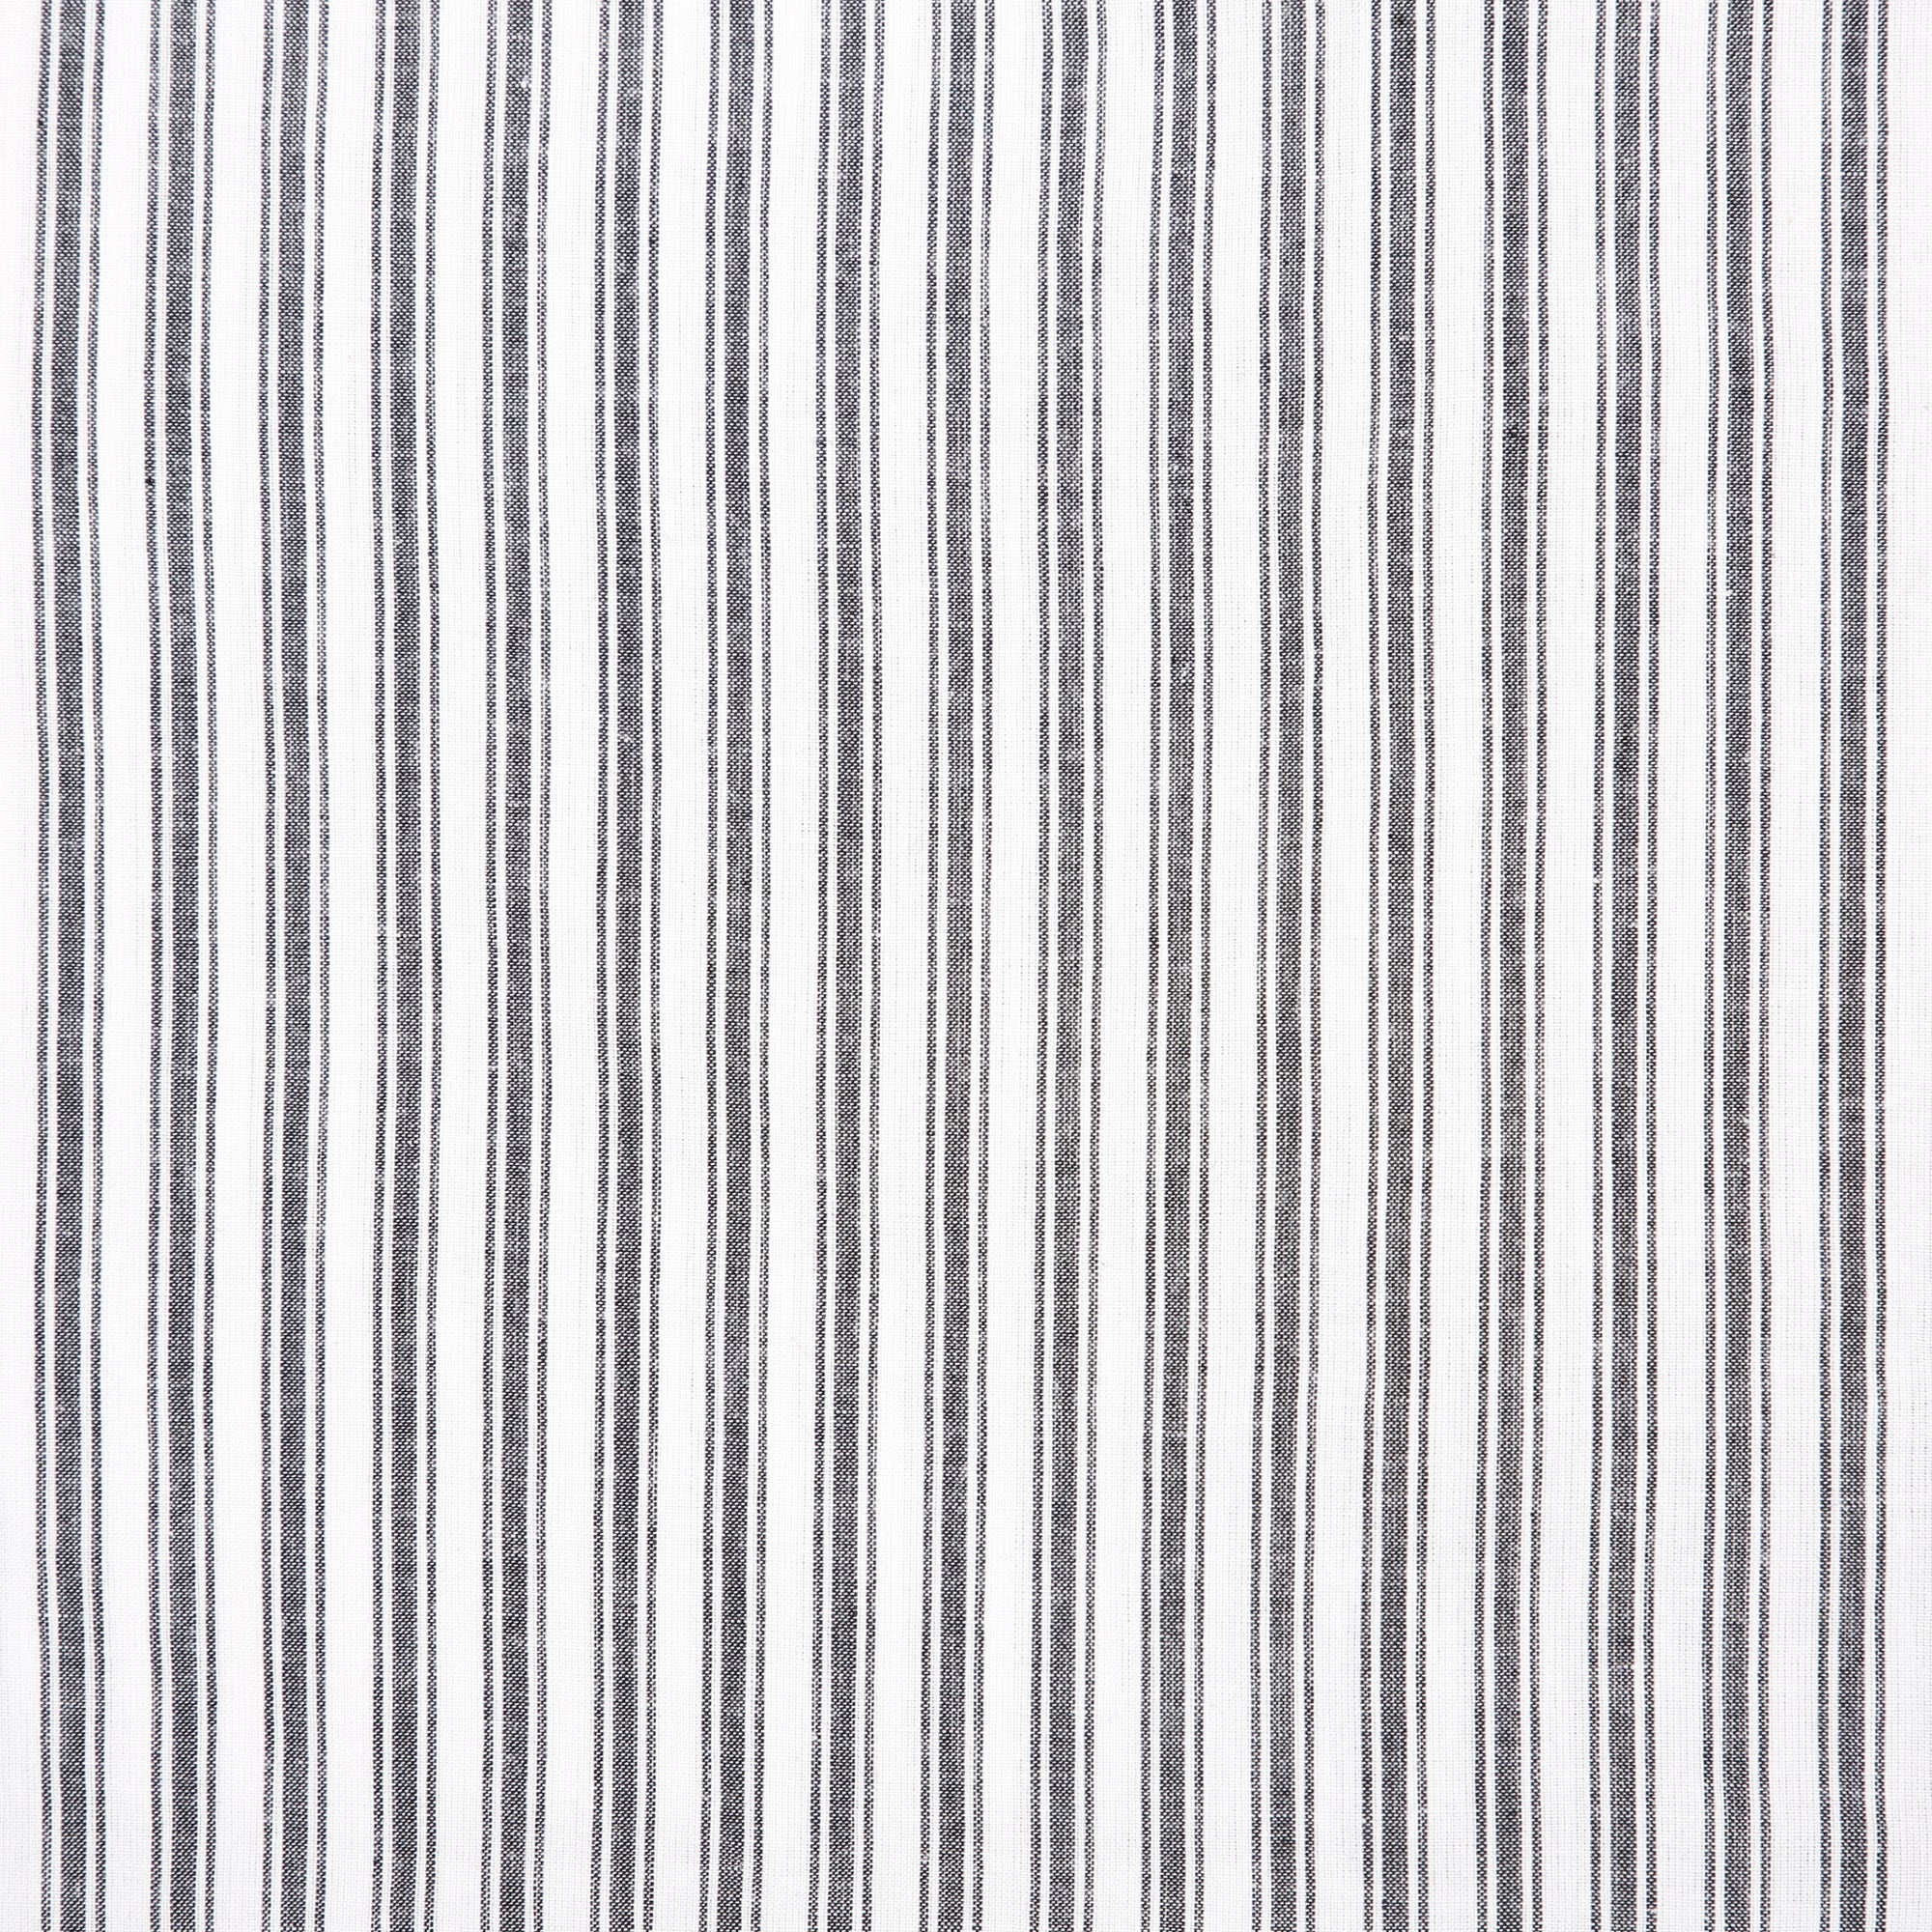 Sawyer Mill Black Ticking Stripe Twin Bed Skirt 39x76x16 VHC Brands